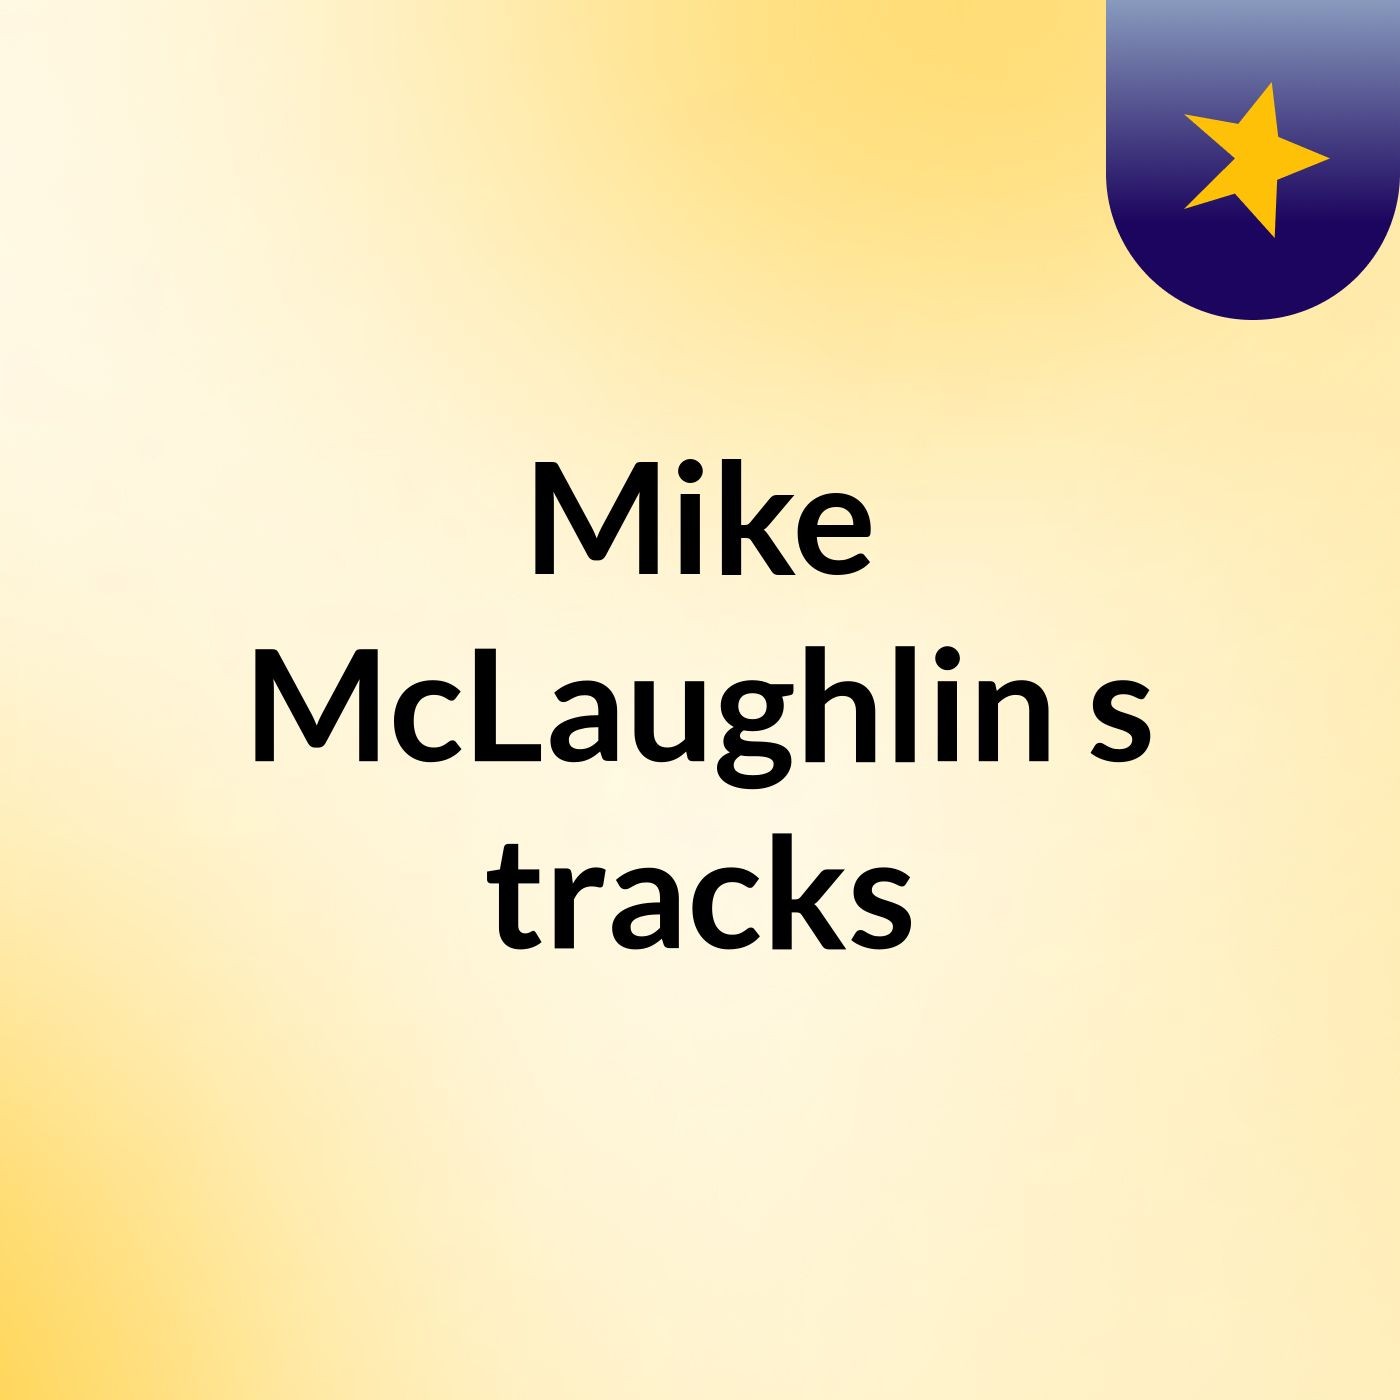 Mike McLaughlin's tracks